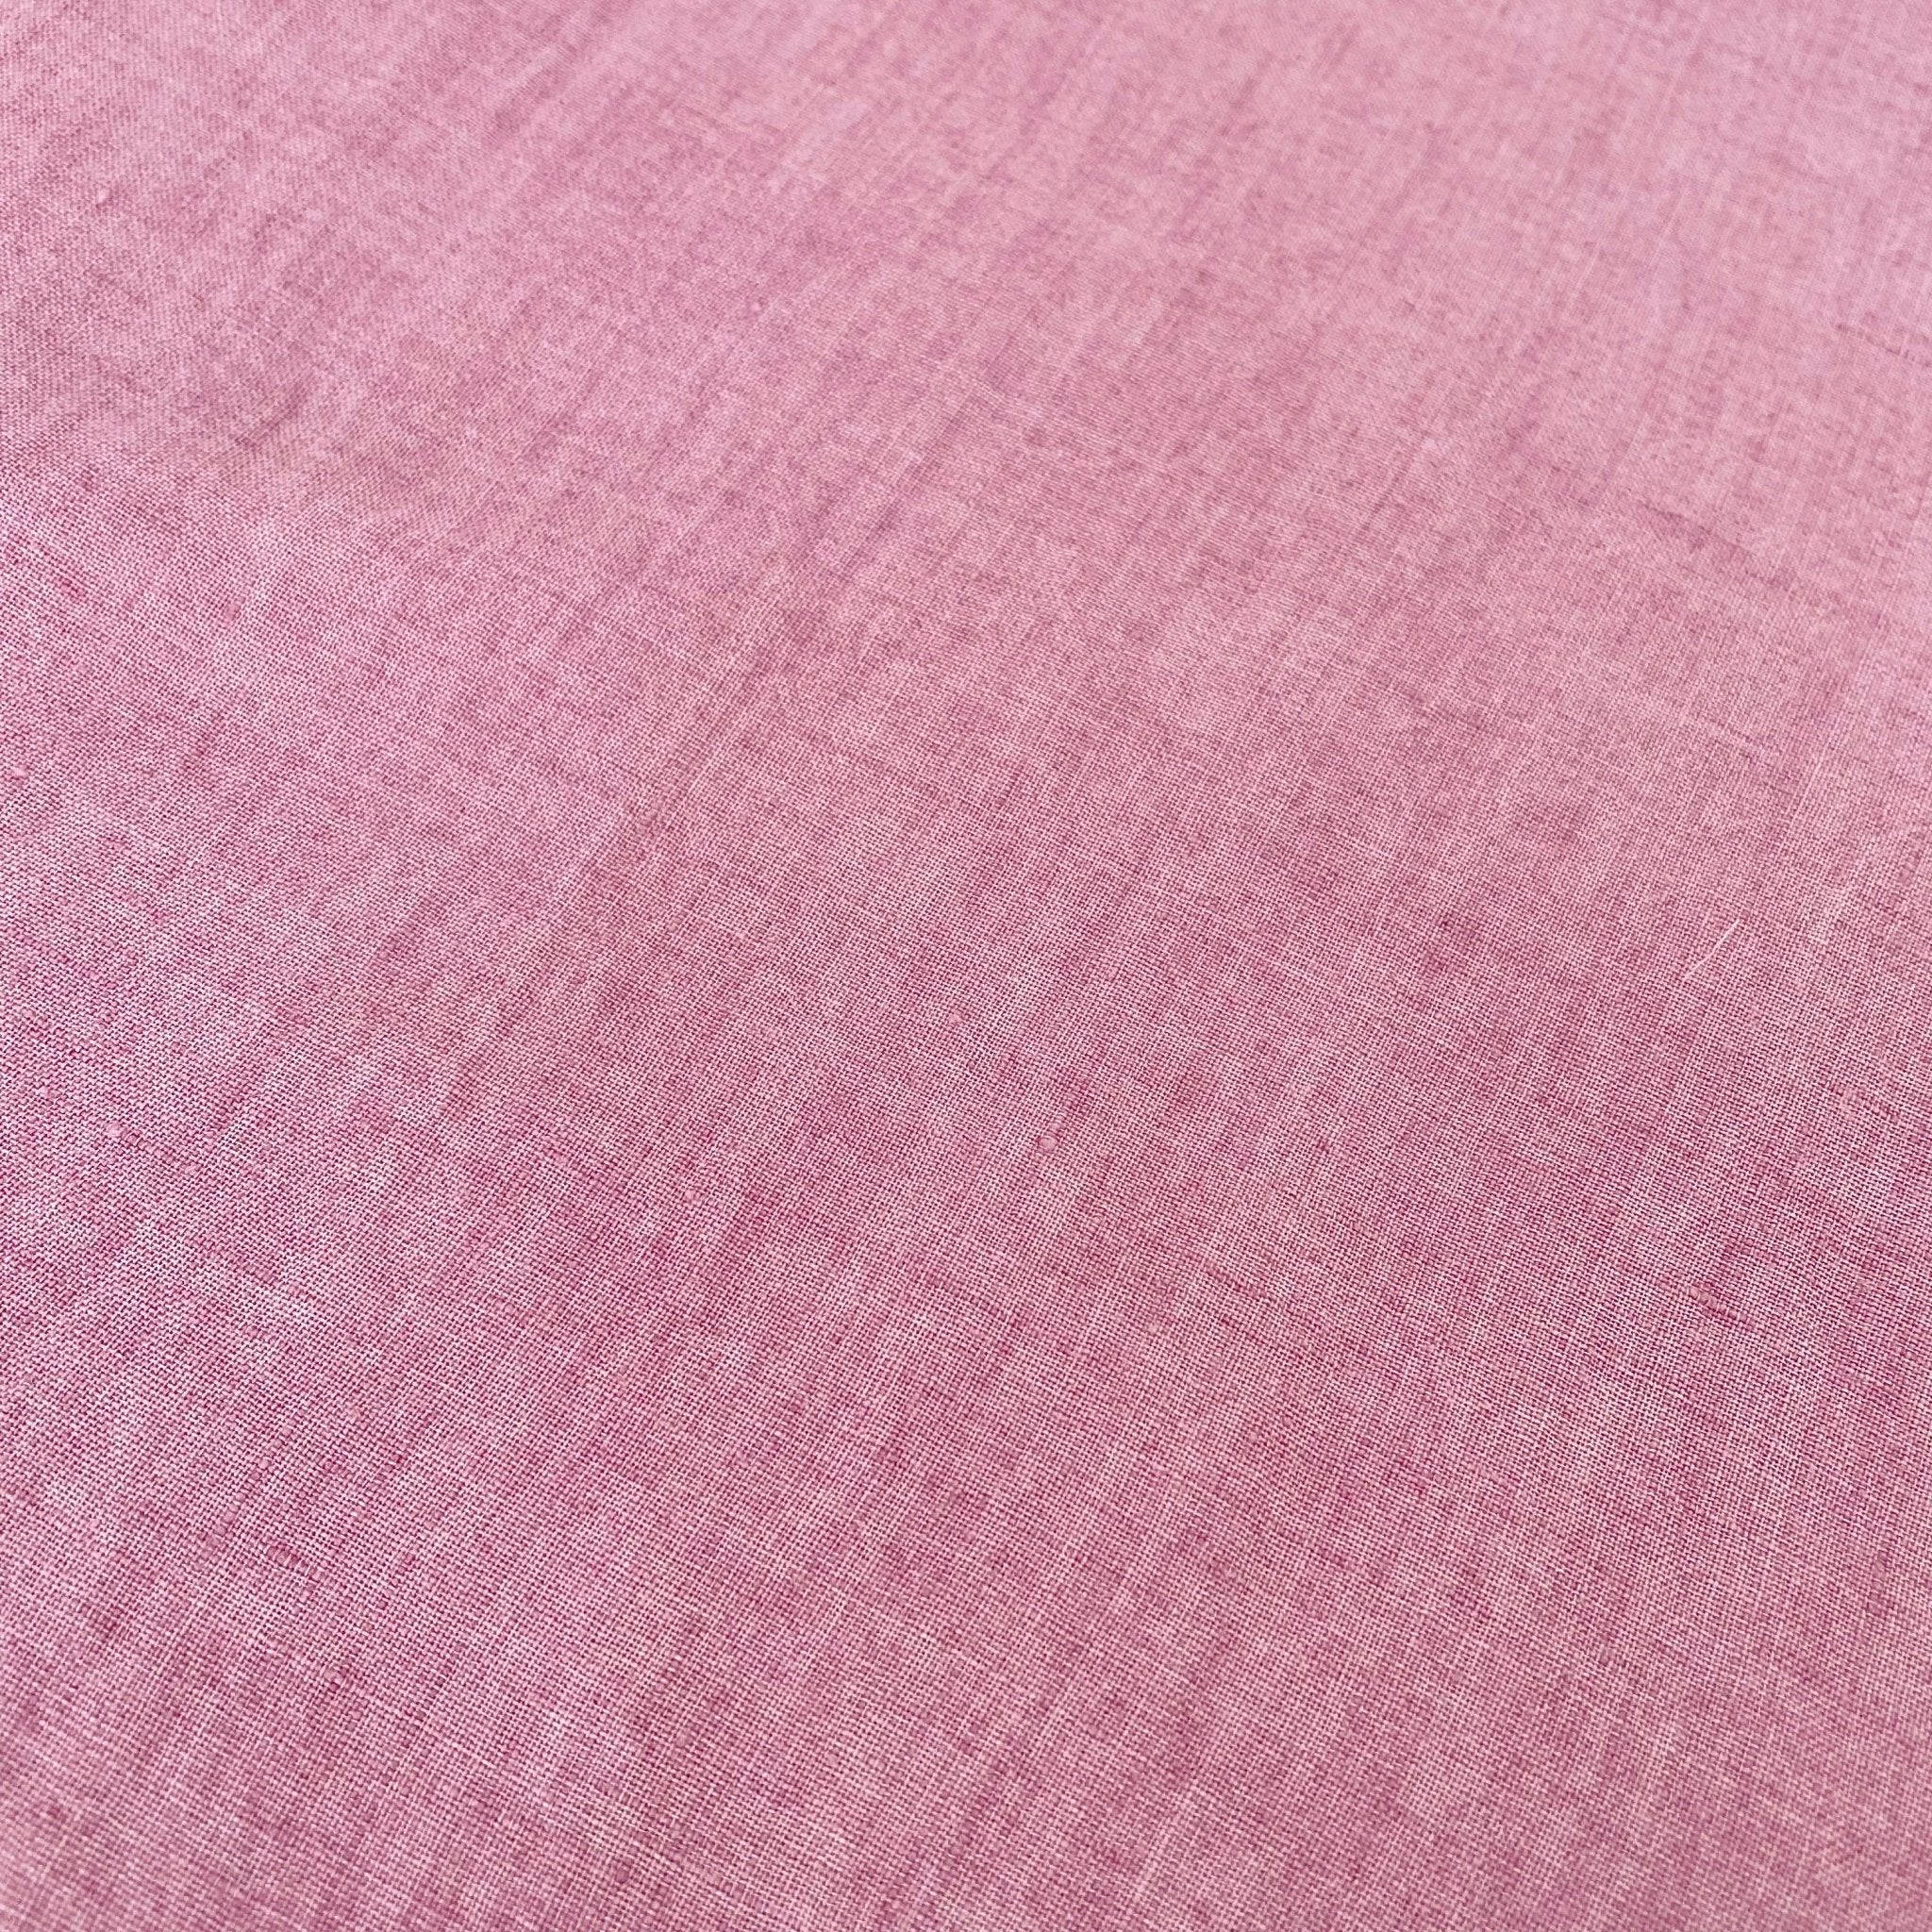 Linen Fabric Light Weight Soft Touch 21S 7575 7566 7576 - The Linen Lab - Pink